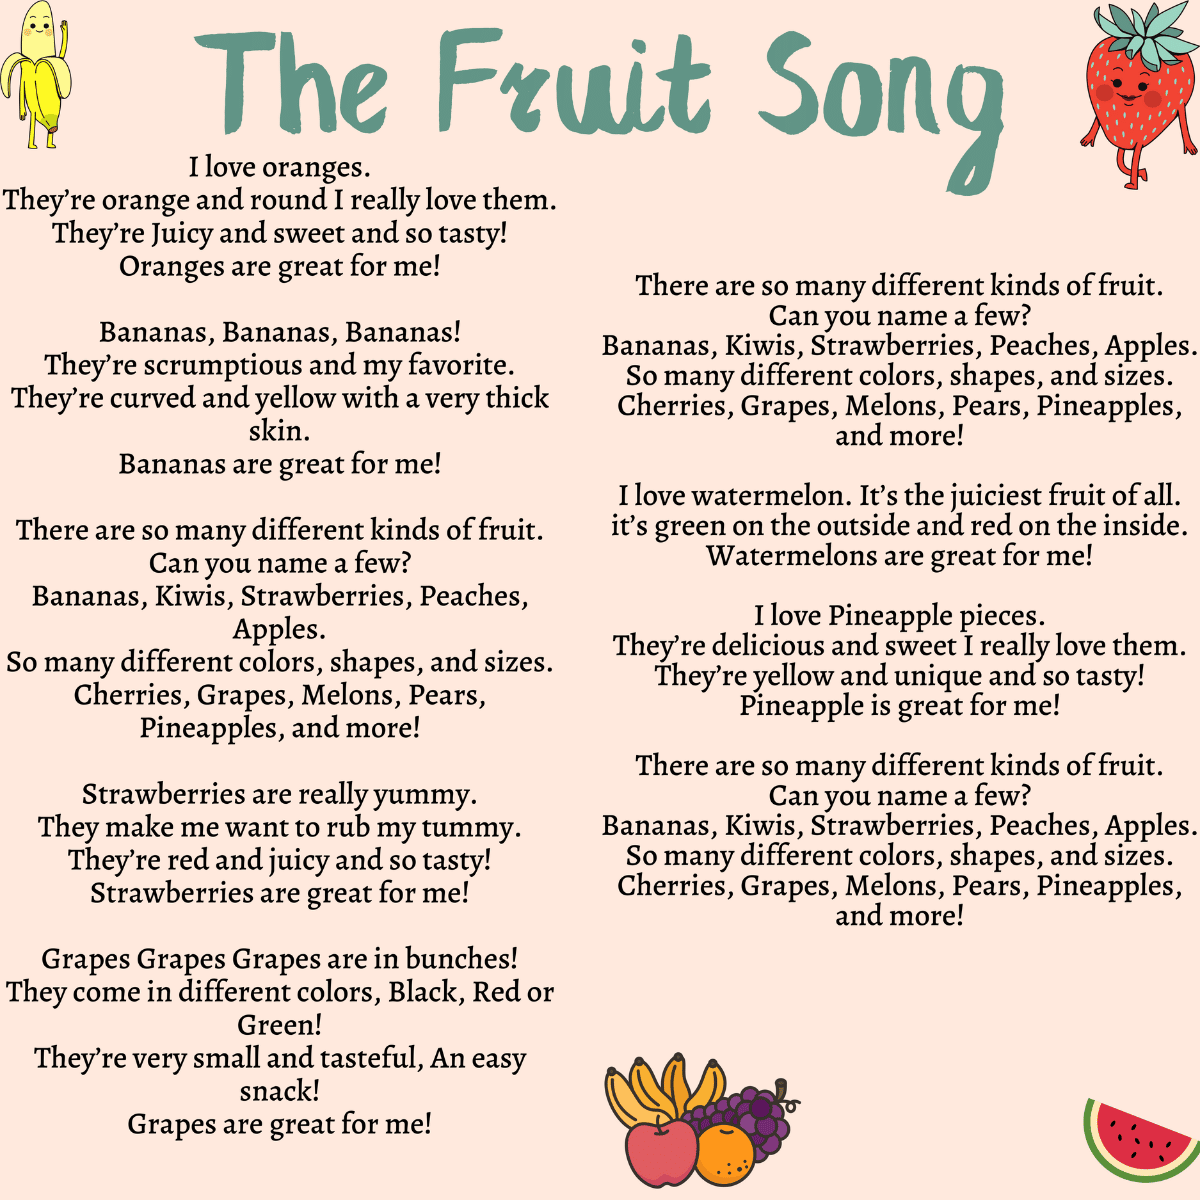 The Fruit Song lyrics